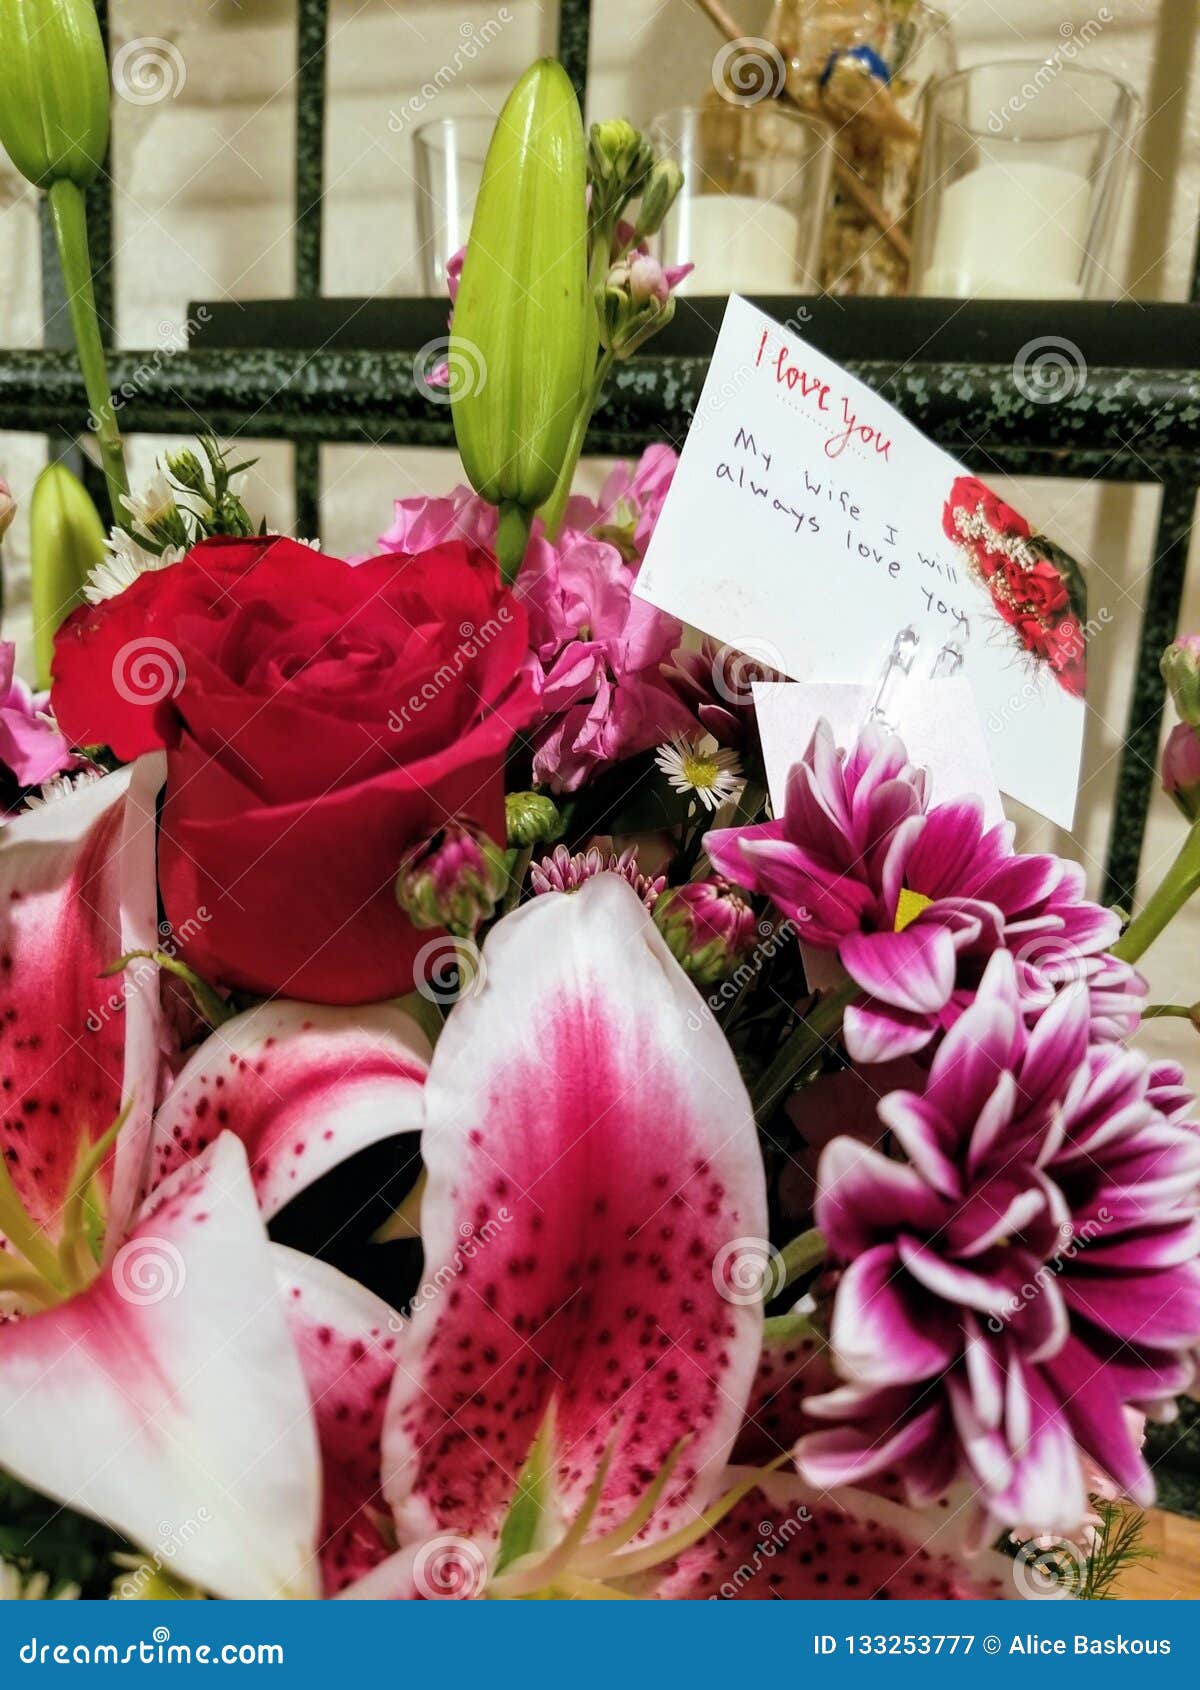 flower bouquet for husband